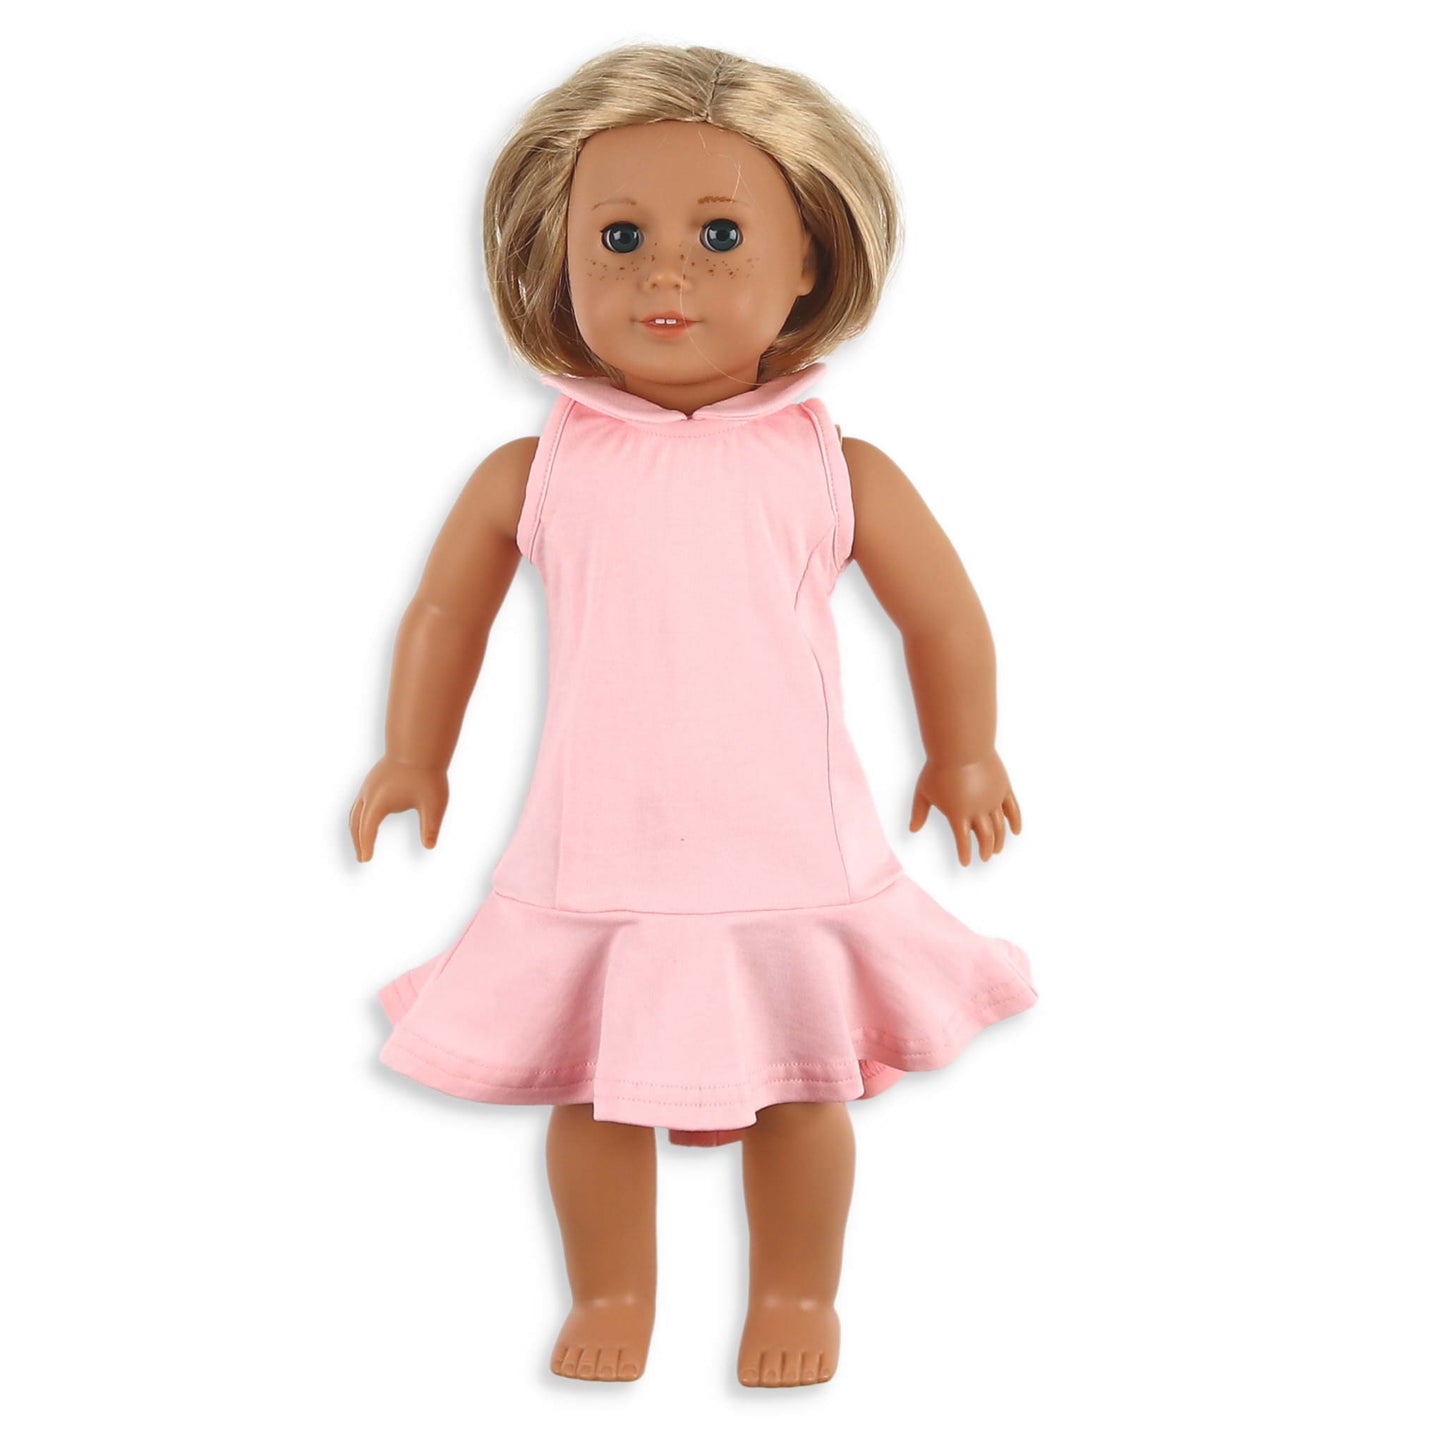 Preppy Pink Polo Dress - Doll Dress